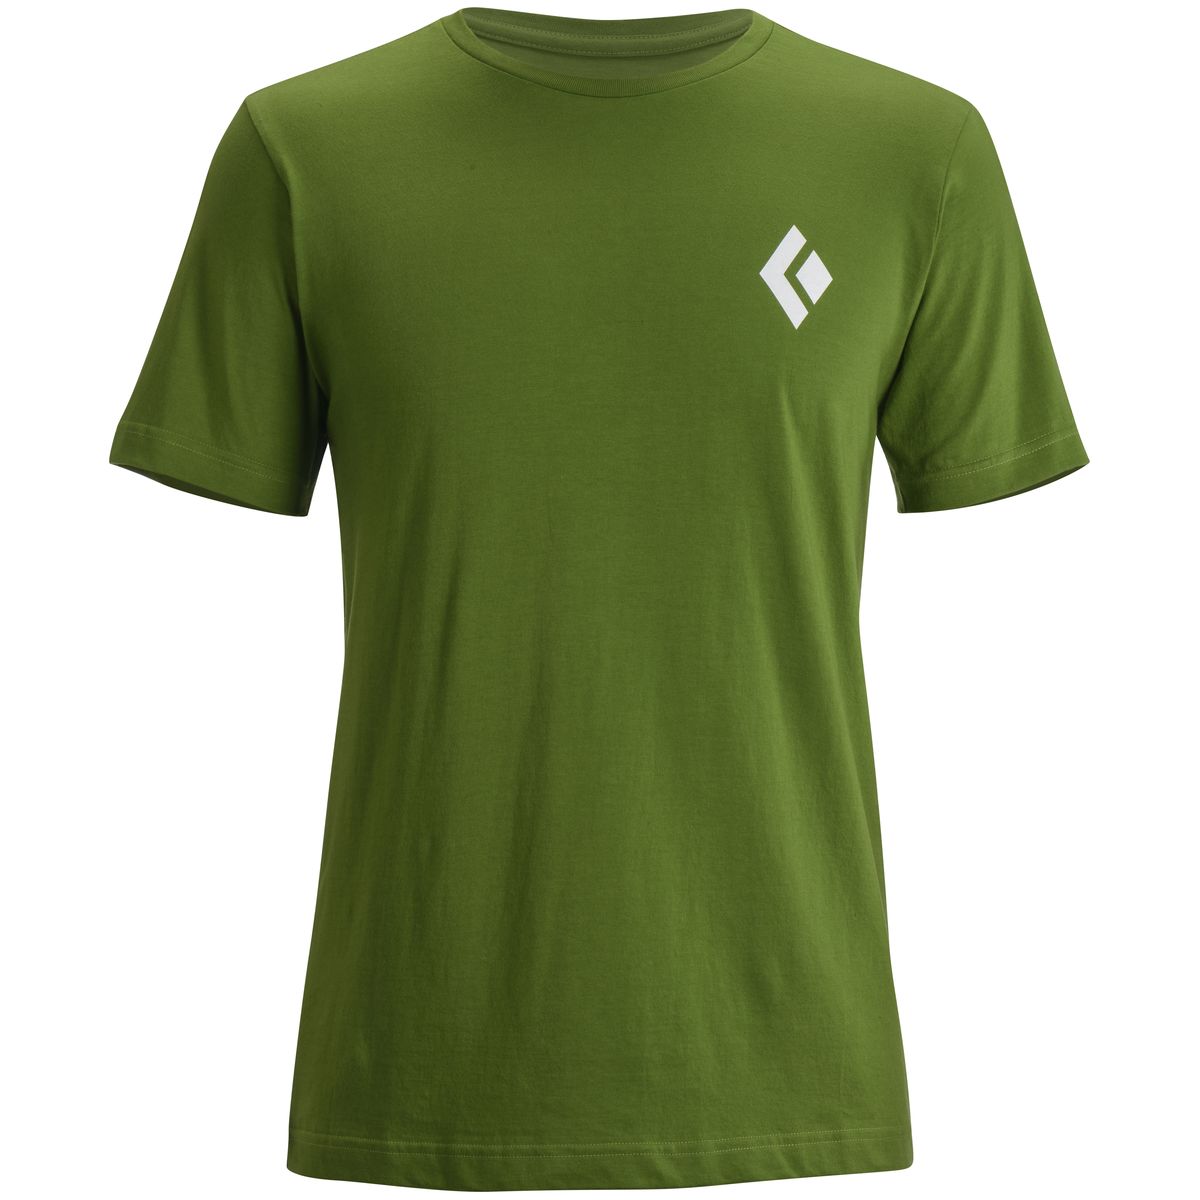 Equipment For Alpinists T-Shirt - Men